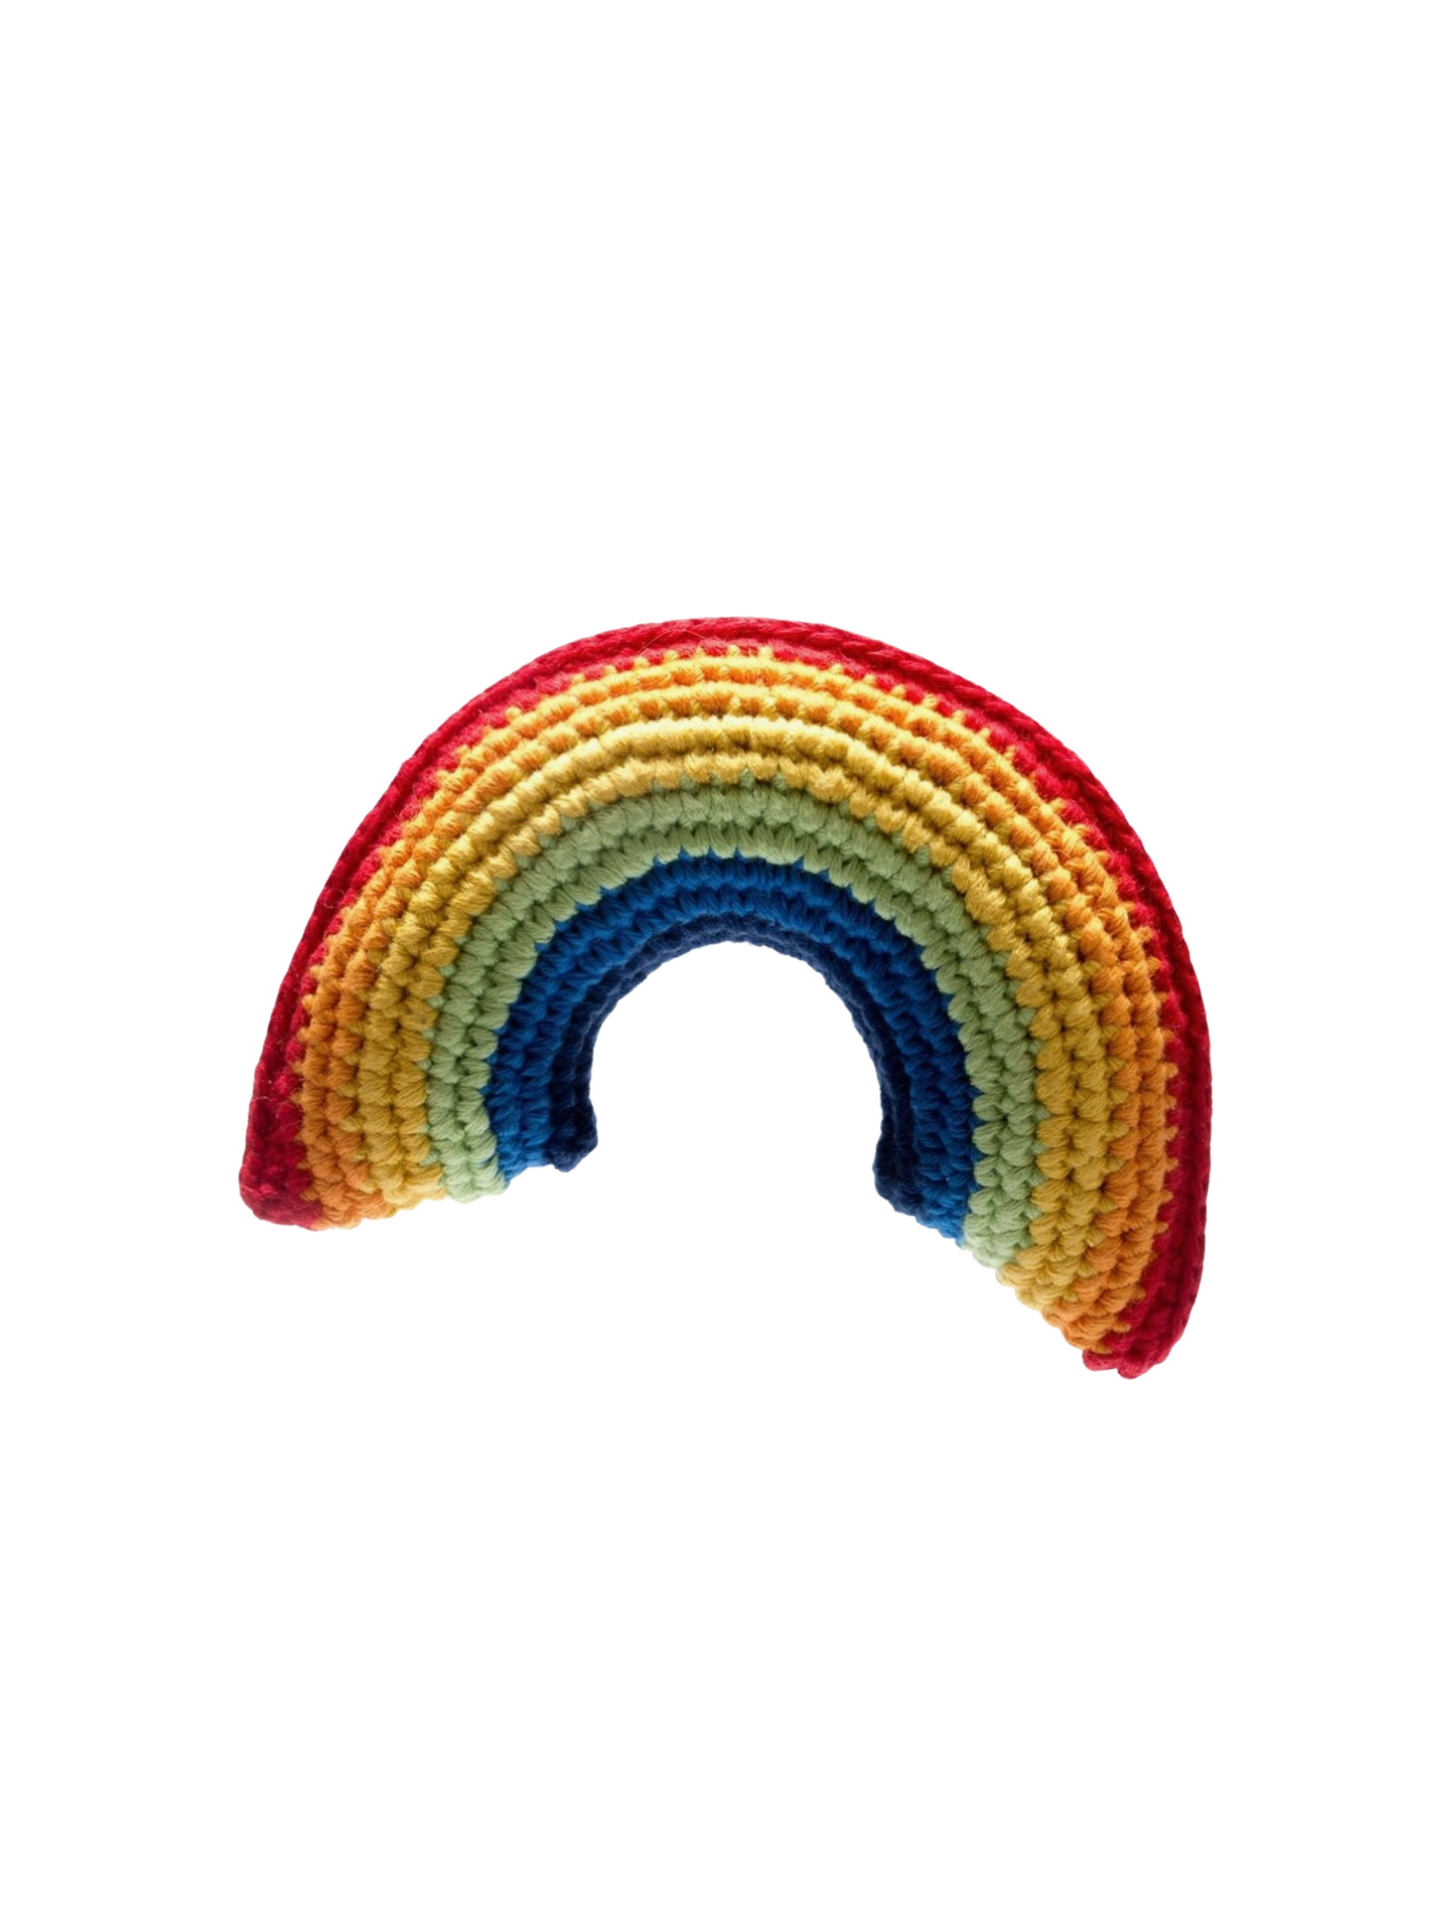 Crochet Bright Rainbow Plush Baby Toy